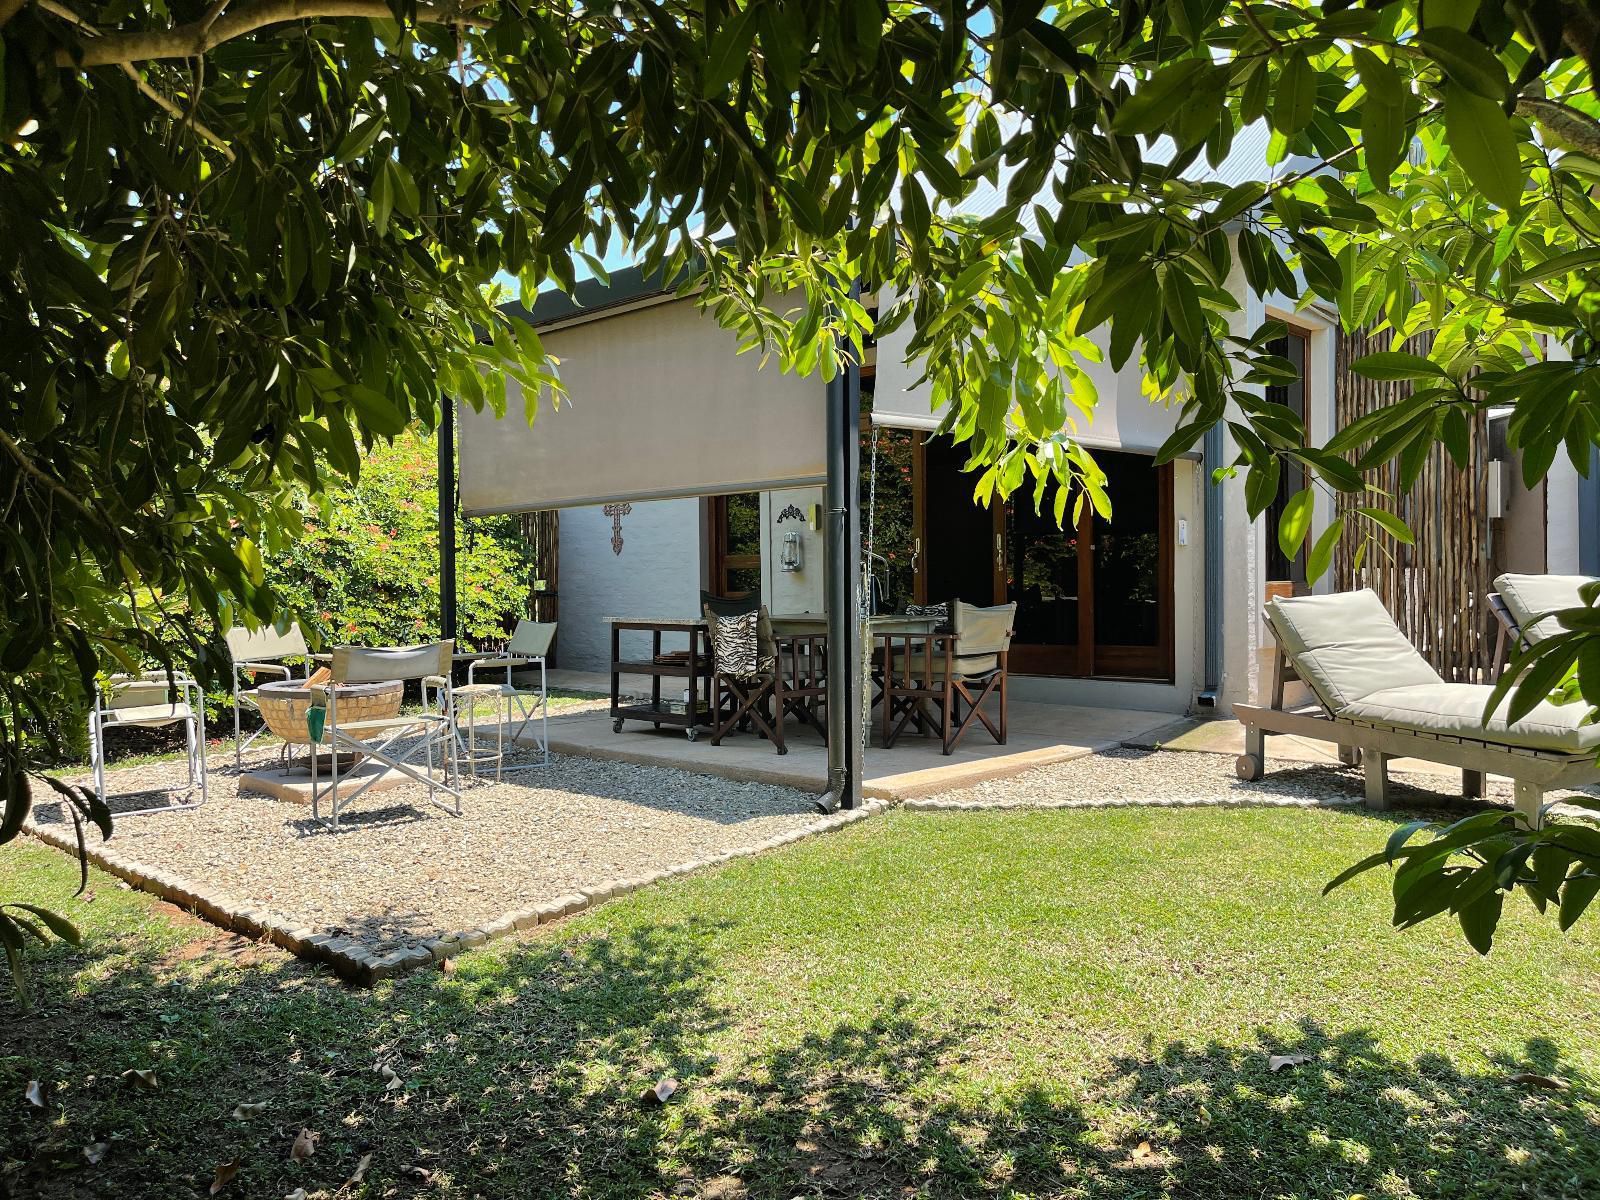 Kambaku River Lodge Malelane Mpumalanga South Africa House, Building, Architecture, Plant, Nature, Garden, Living Room